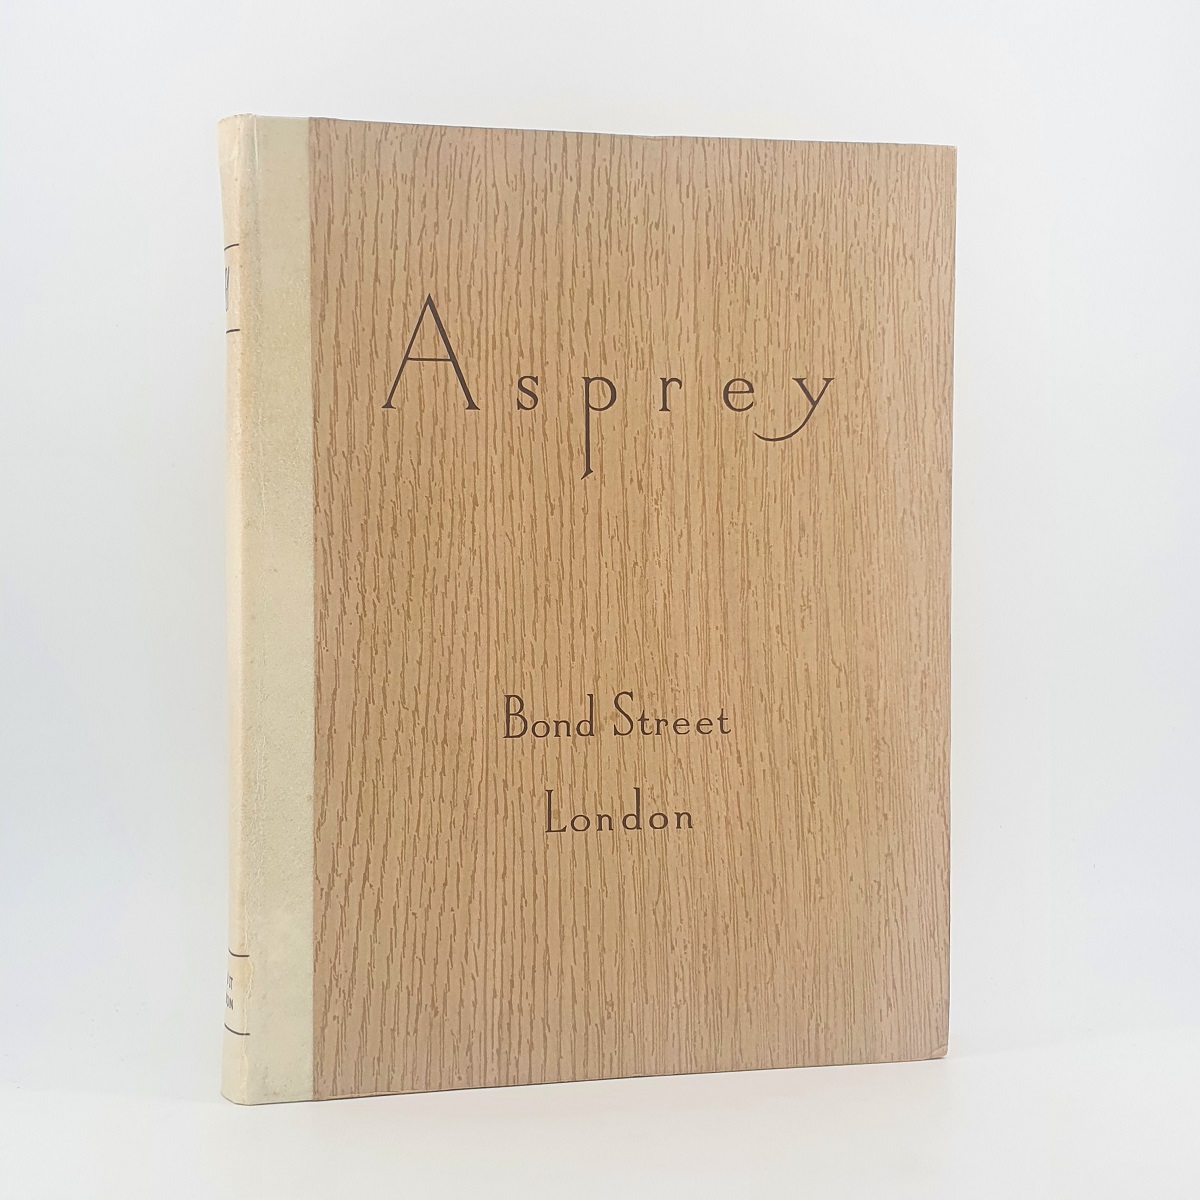 Asprey and Co. Ltd. [Trade Catalogue]